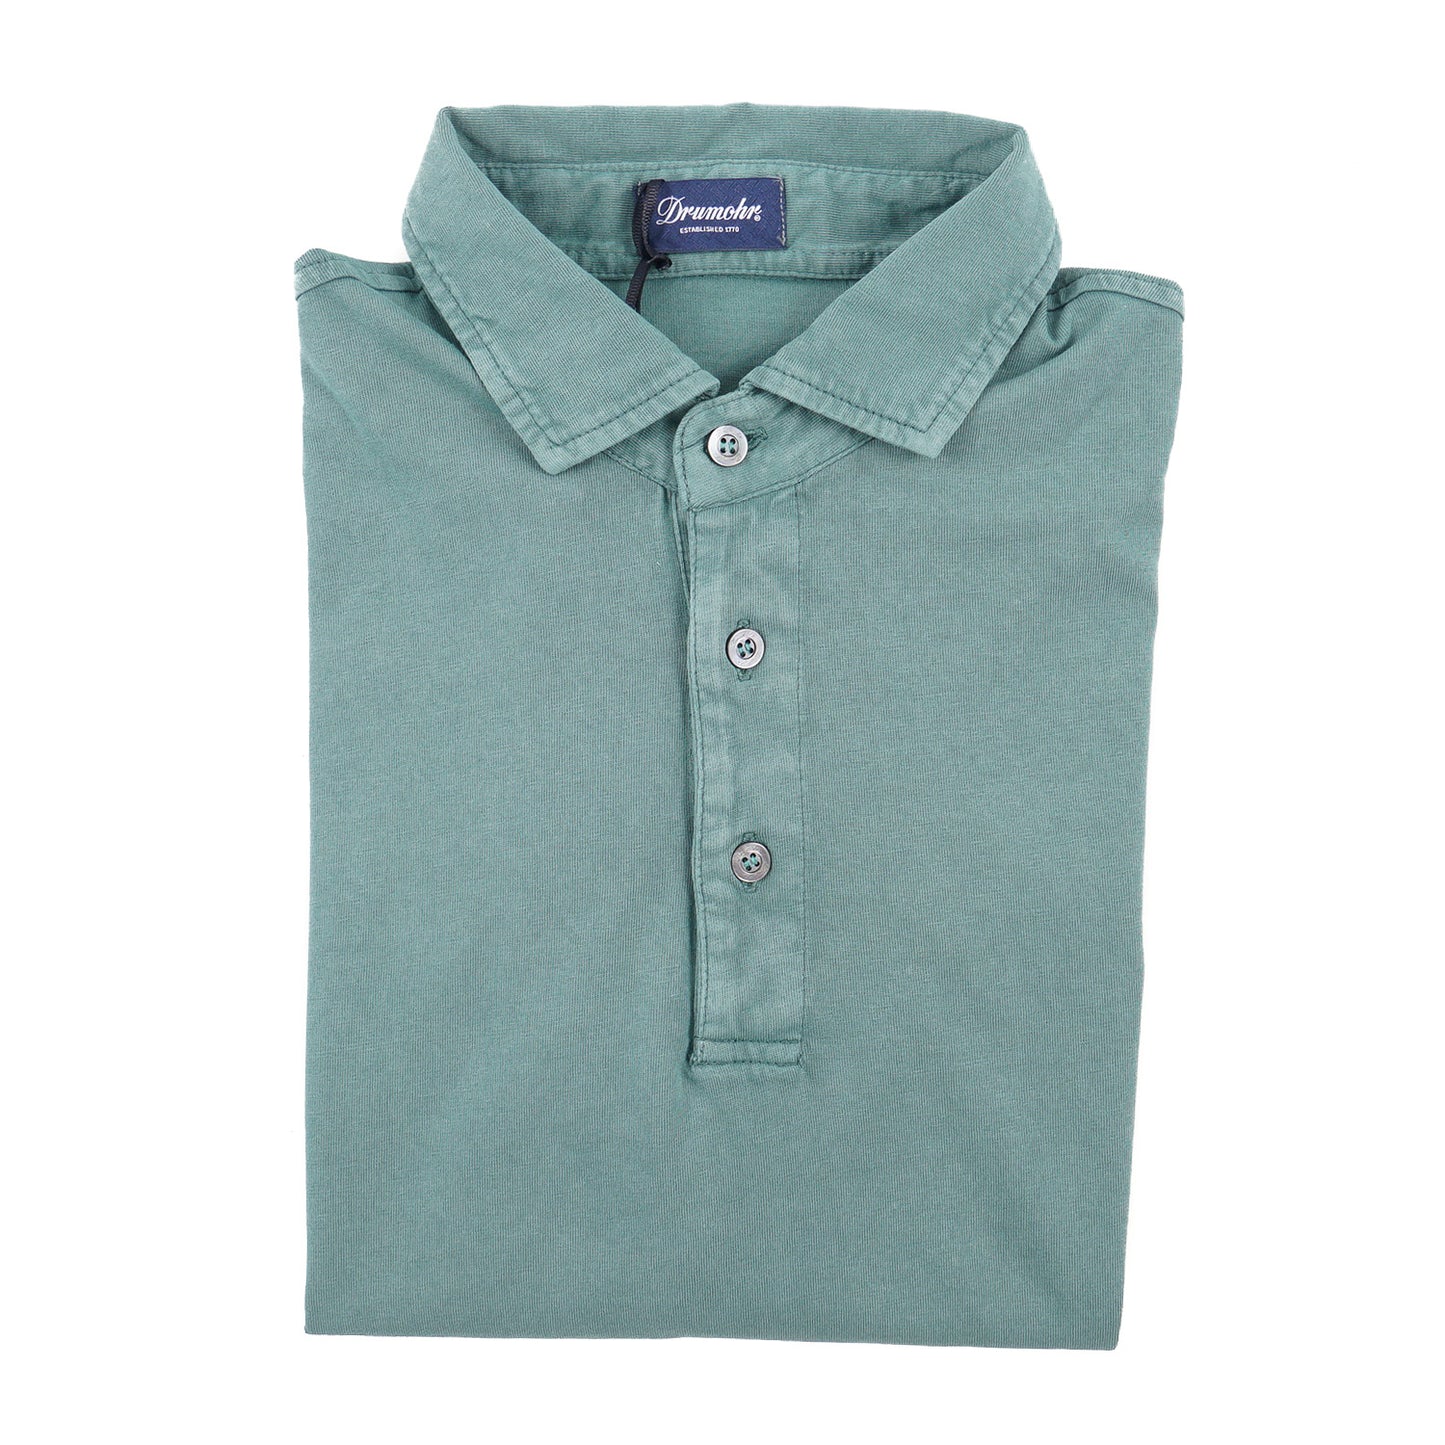 Drumohr Slim-Fit Jersey Cotton Polo Shirt - Top Shelf Apparel